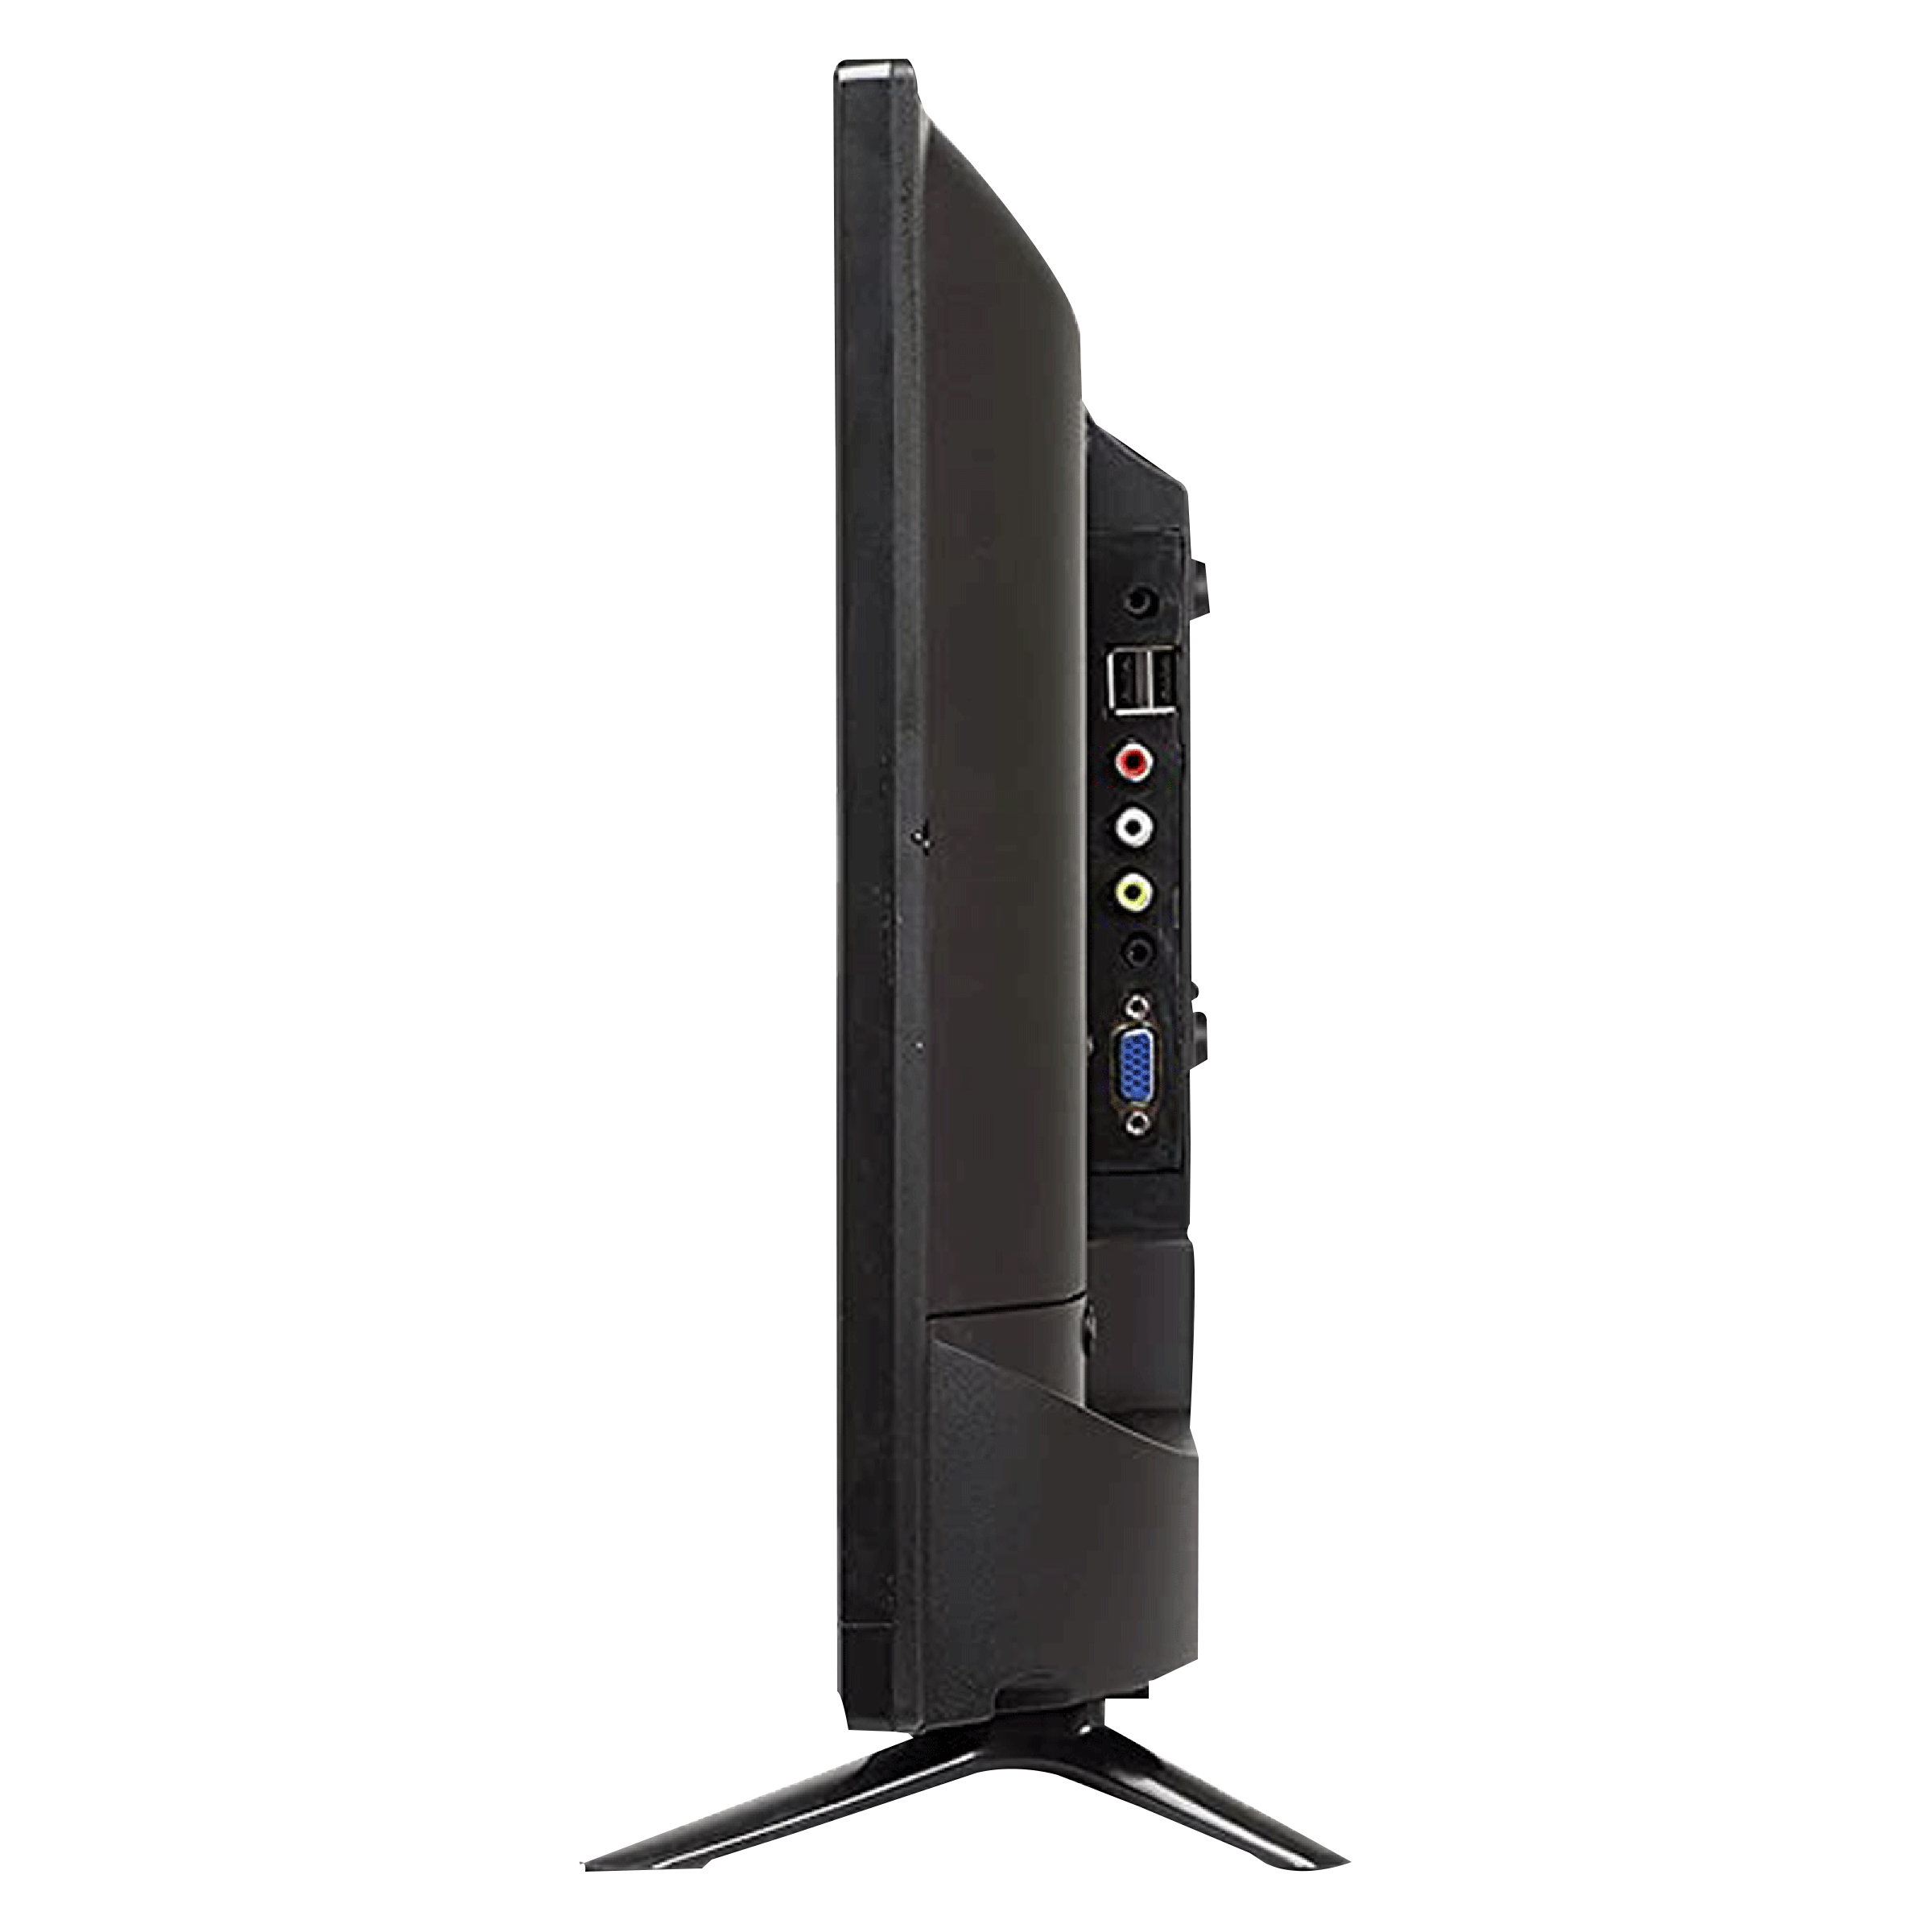 Akai 60 cm (24 inch) HD Ready LED TV with A+ Grade Panel (2020 model)_4